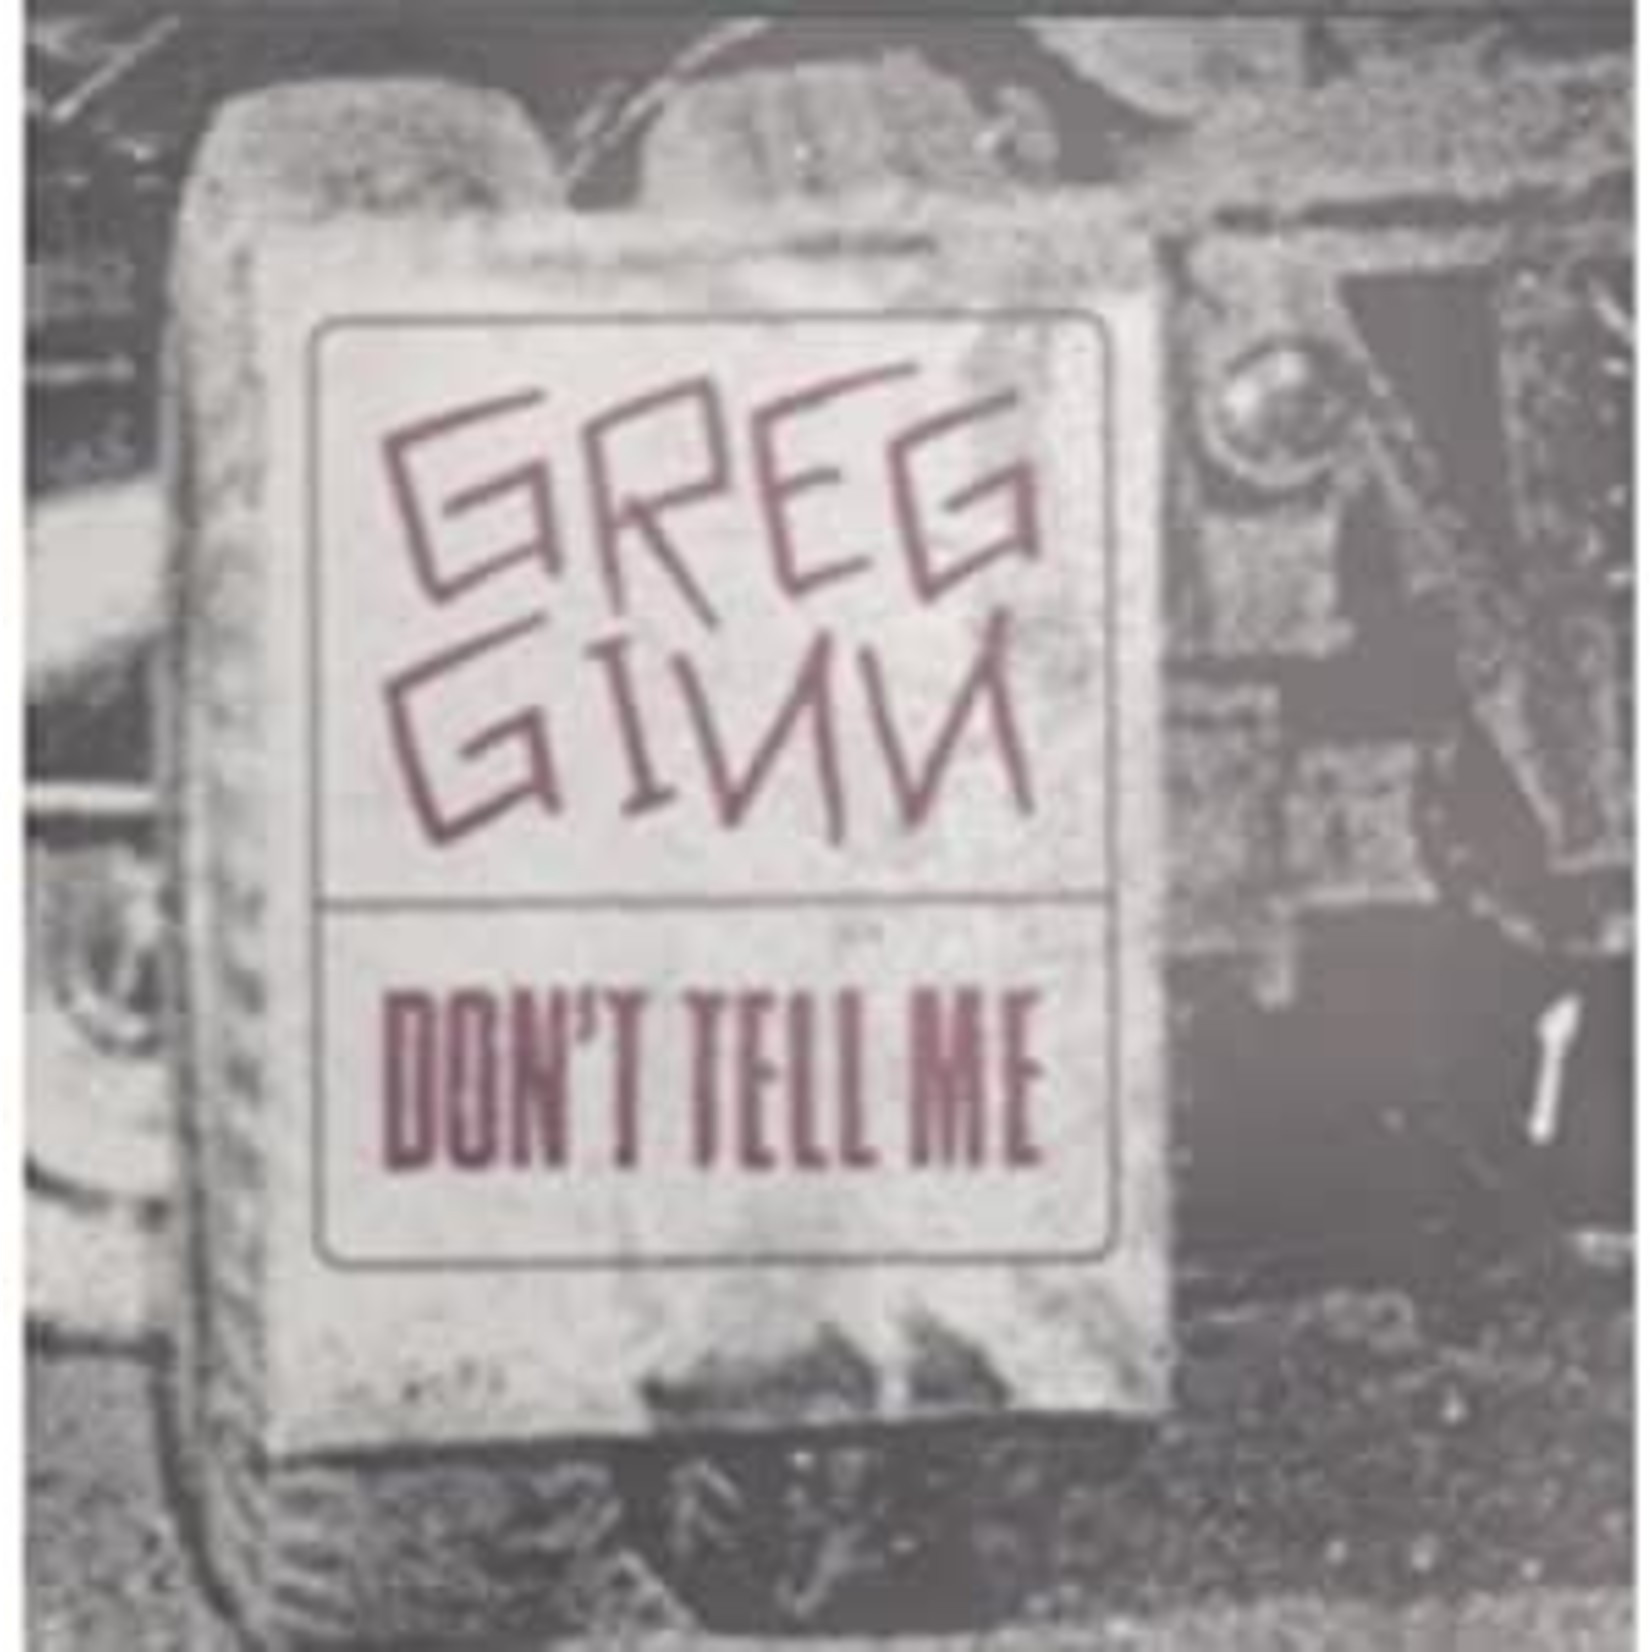 Greg Ginn - Don't Tell Me [USED CD]